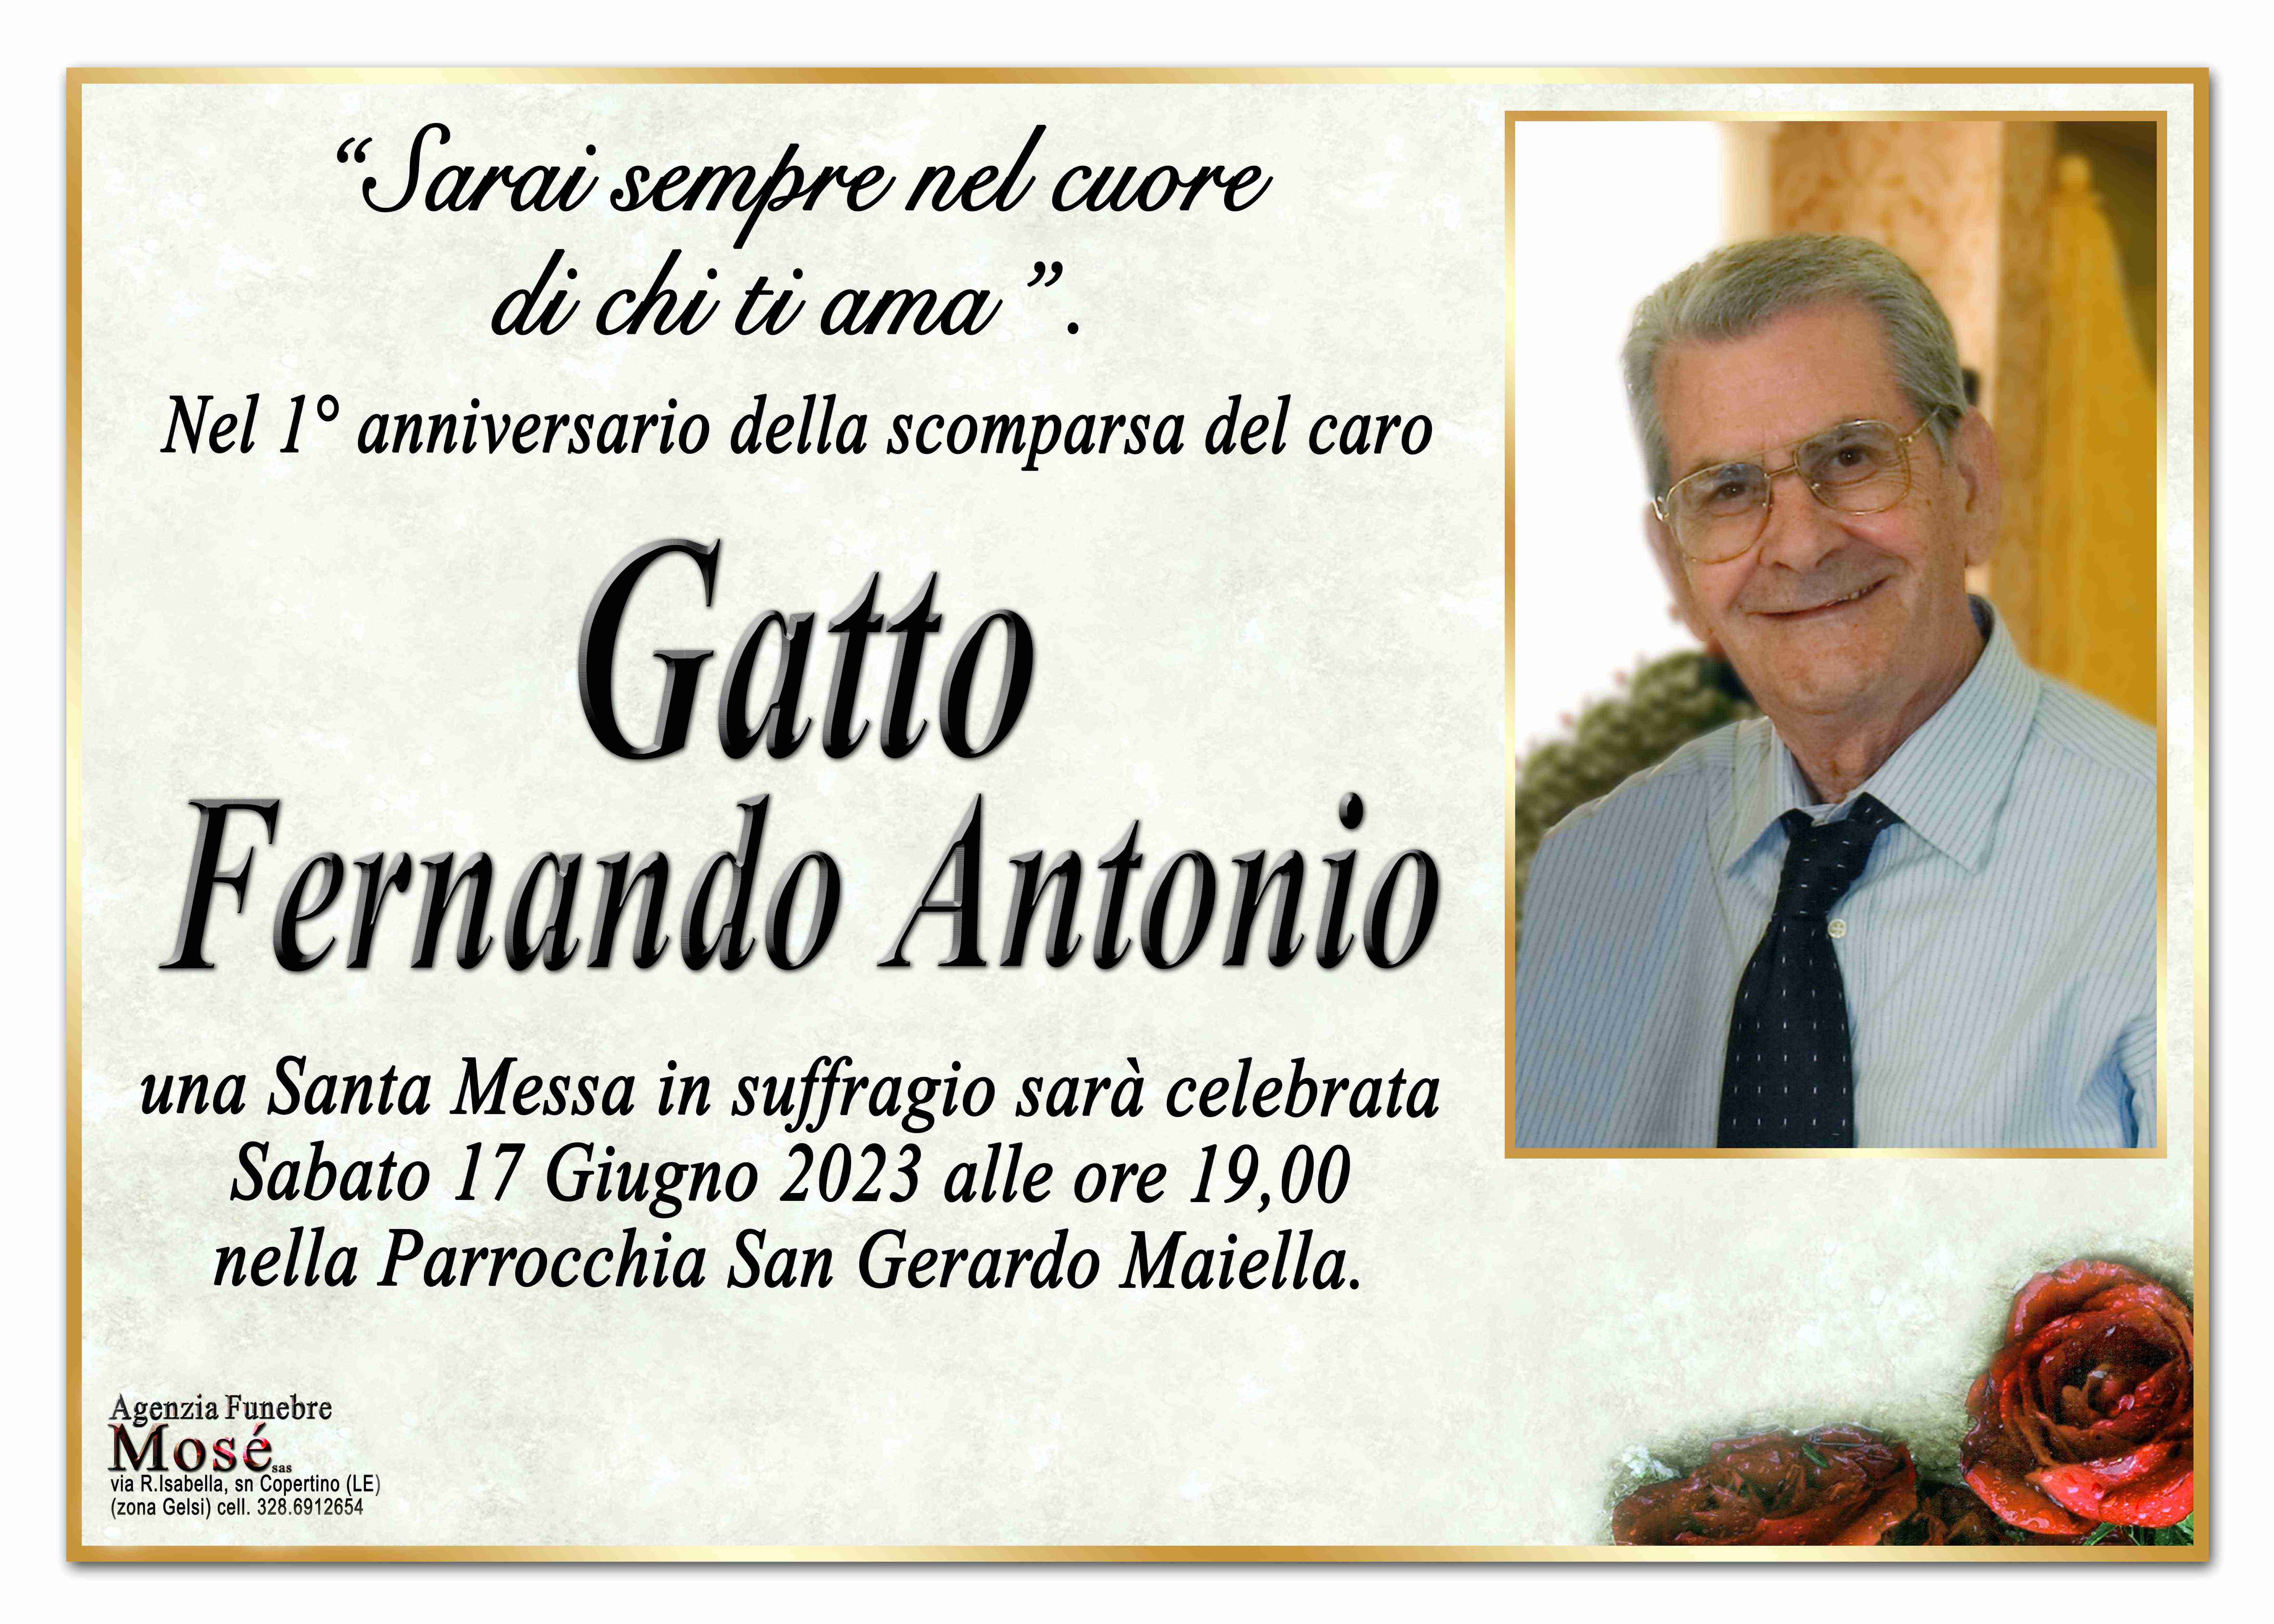 Fernando Antonio Gatto